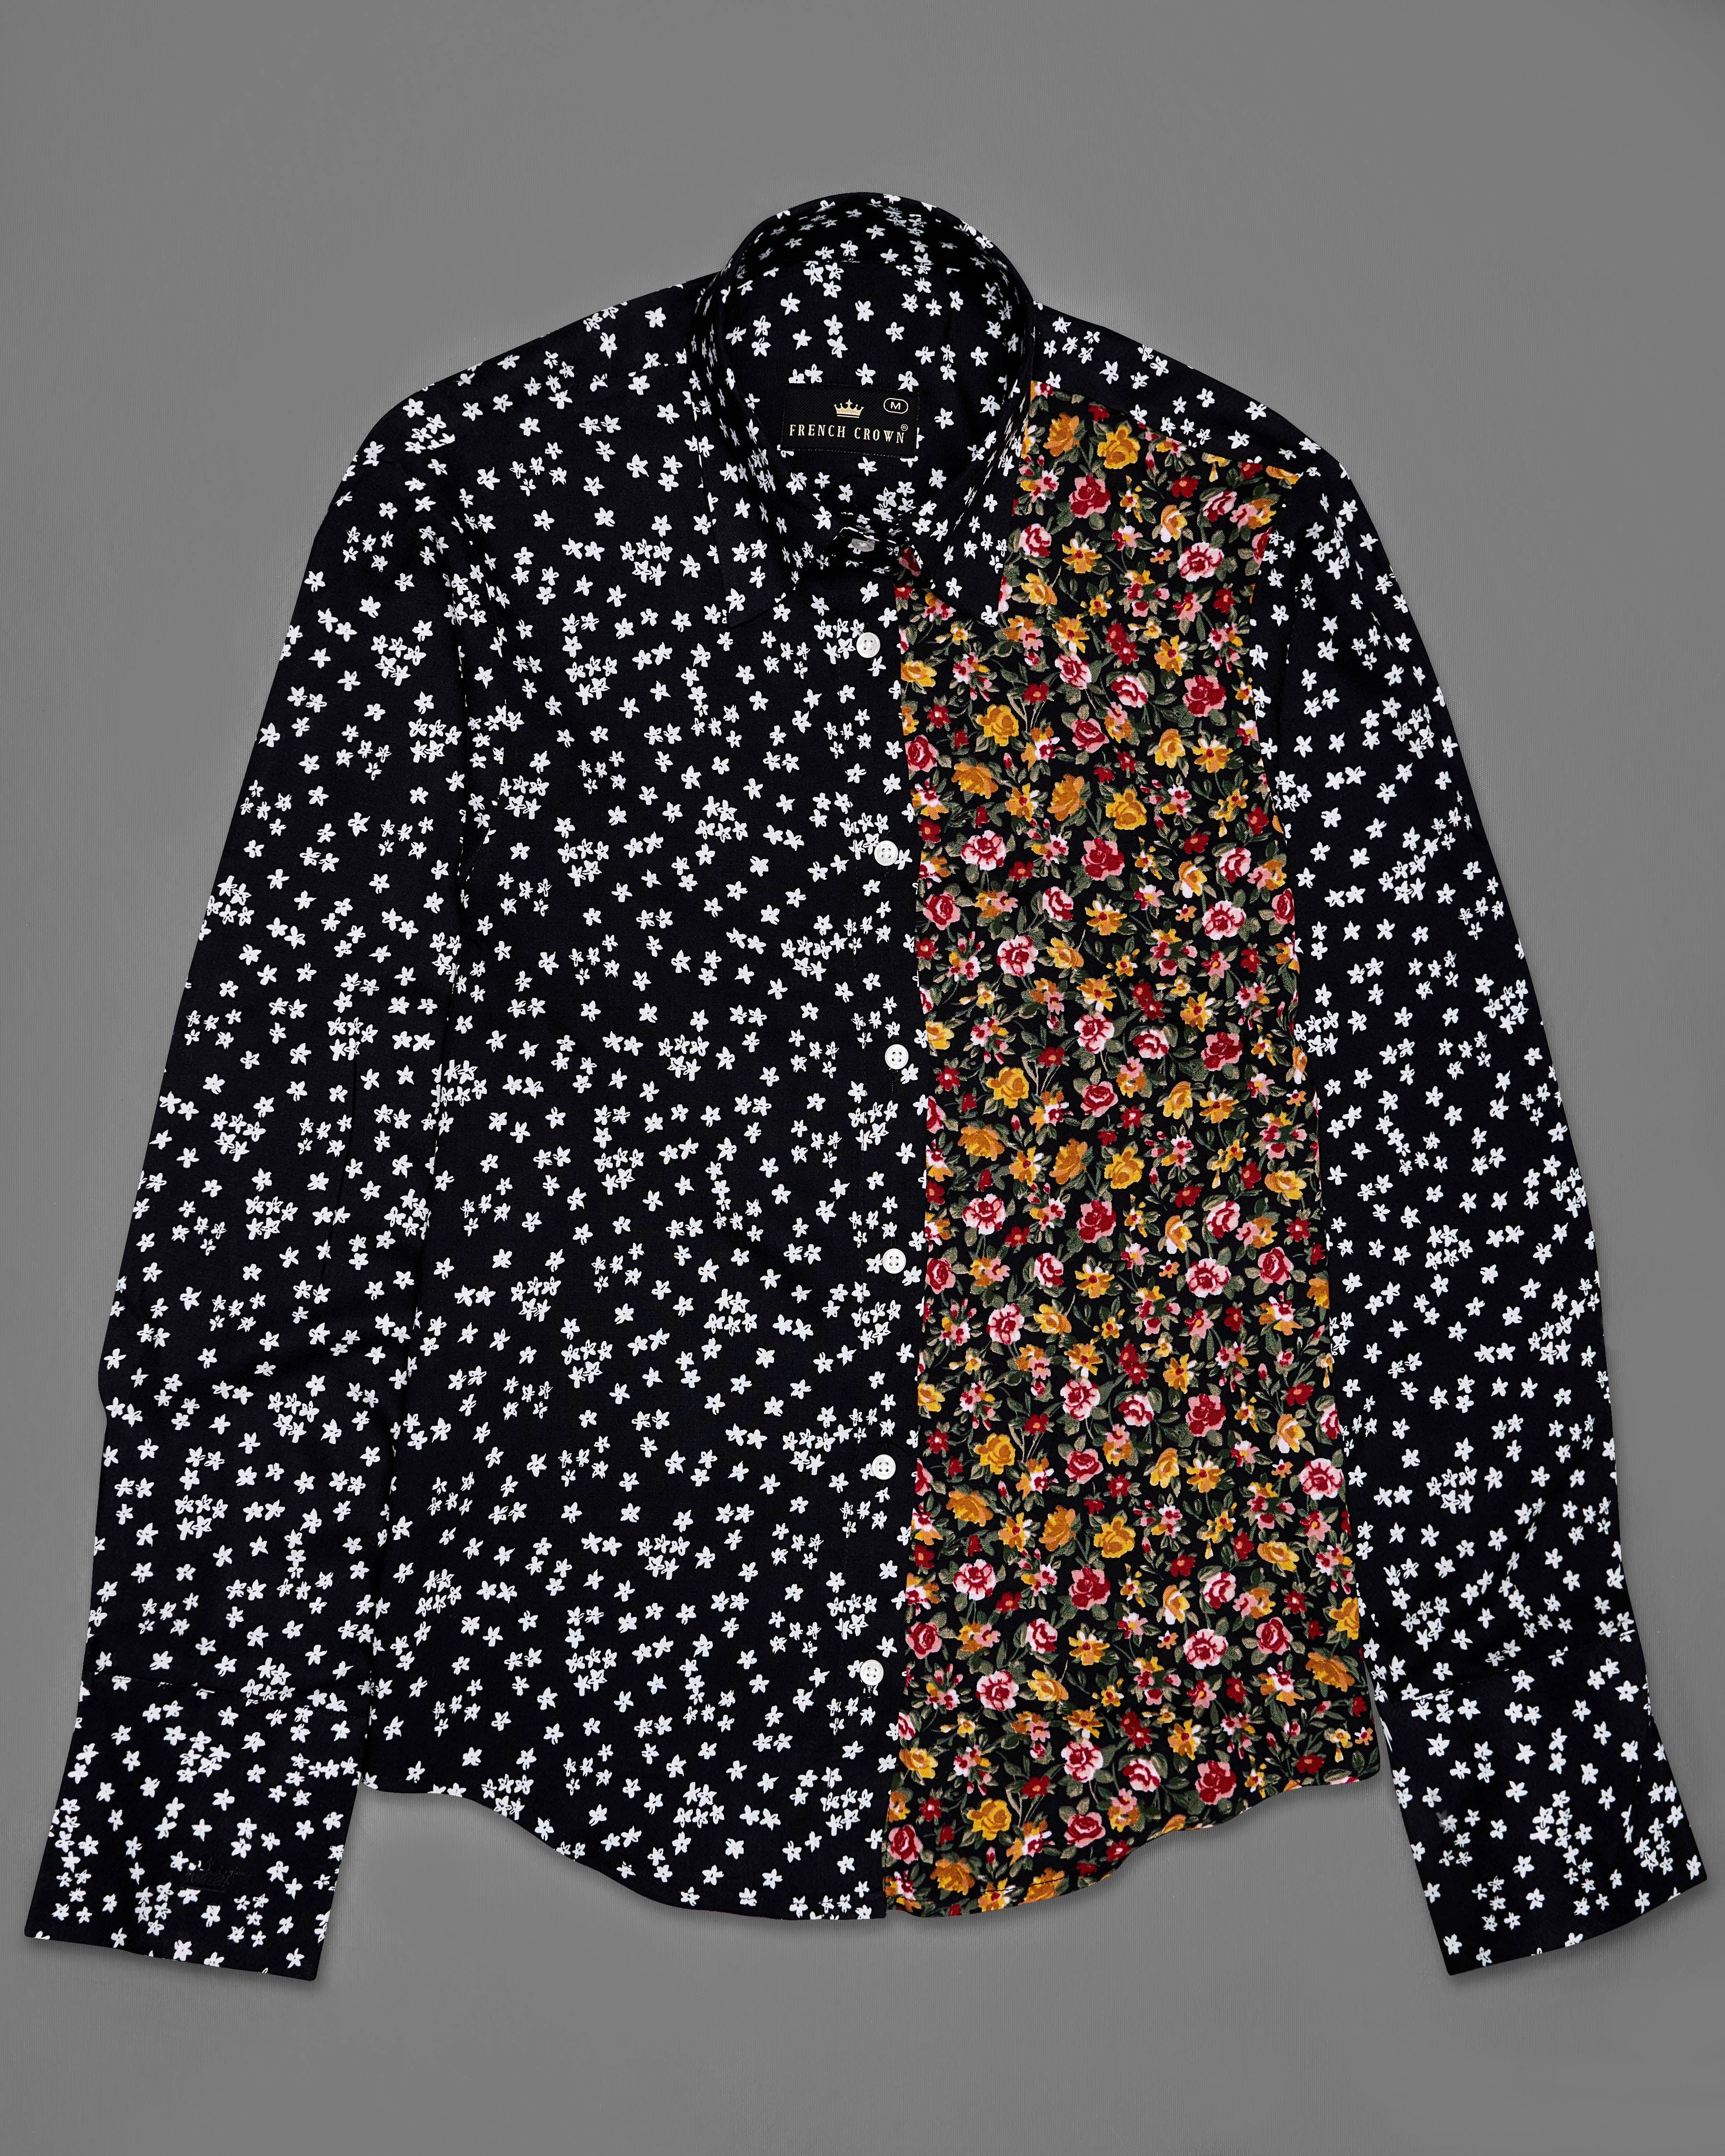 Jade Black Ditsy Printed Premium Cotton Shirt WS017-M-32, WS017-M-34, WS017-M-36, WS017-M-38, WS017-M-40, WS017-M-42